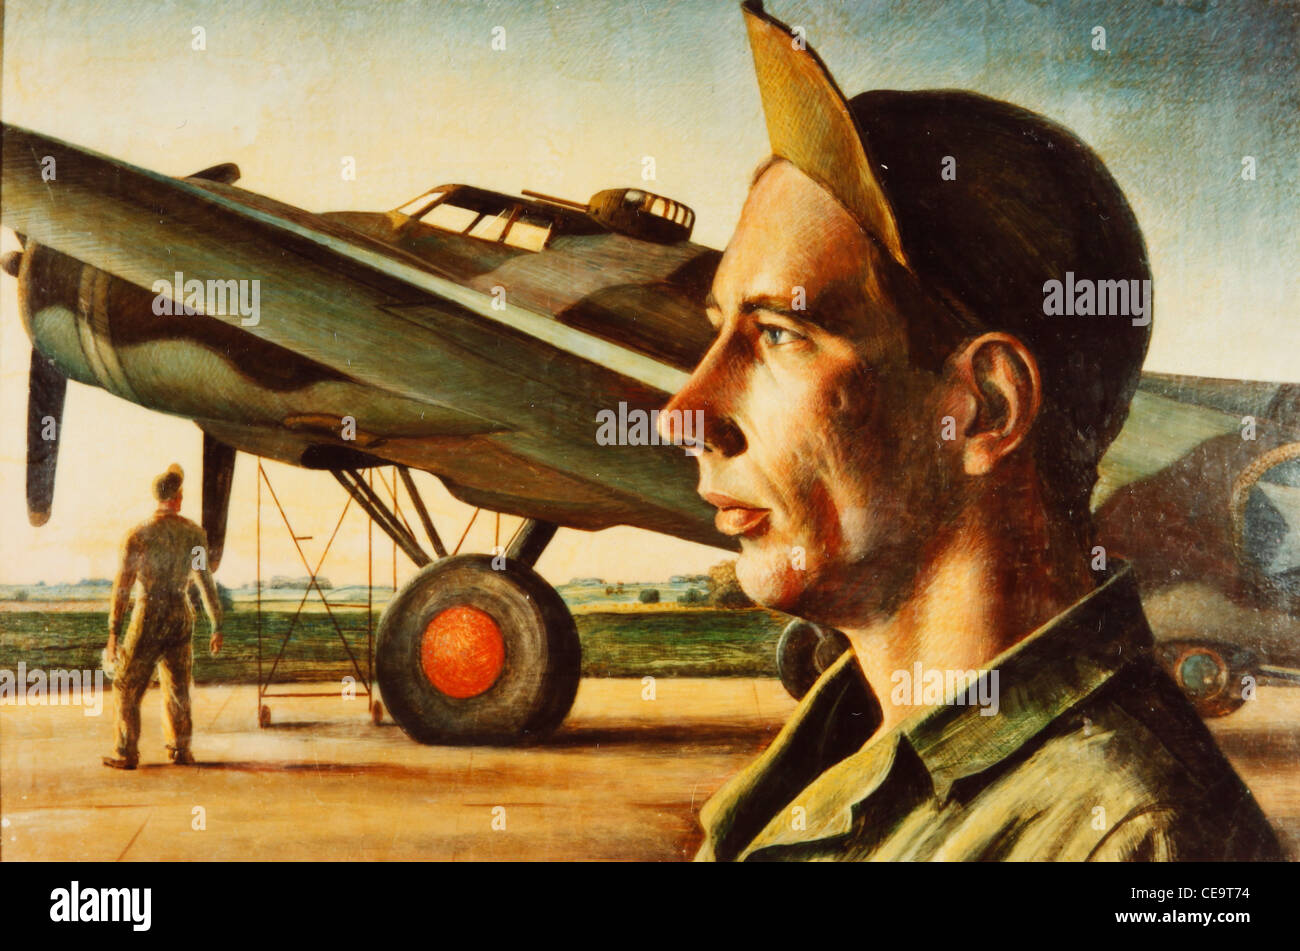 Crew-Chief - England 1942 während WWII Bomber Gemälde Porträt Stockfoto